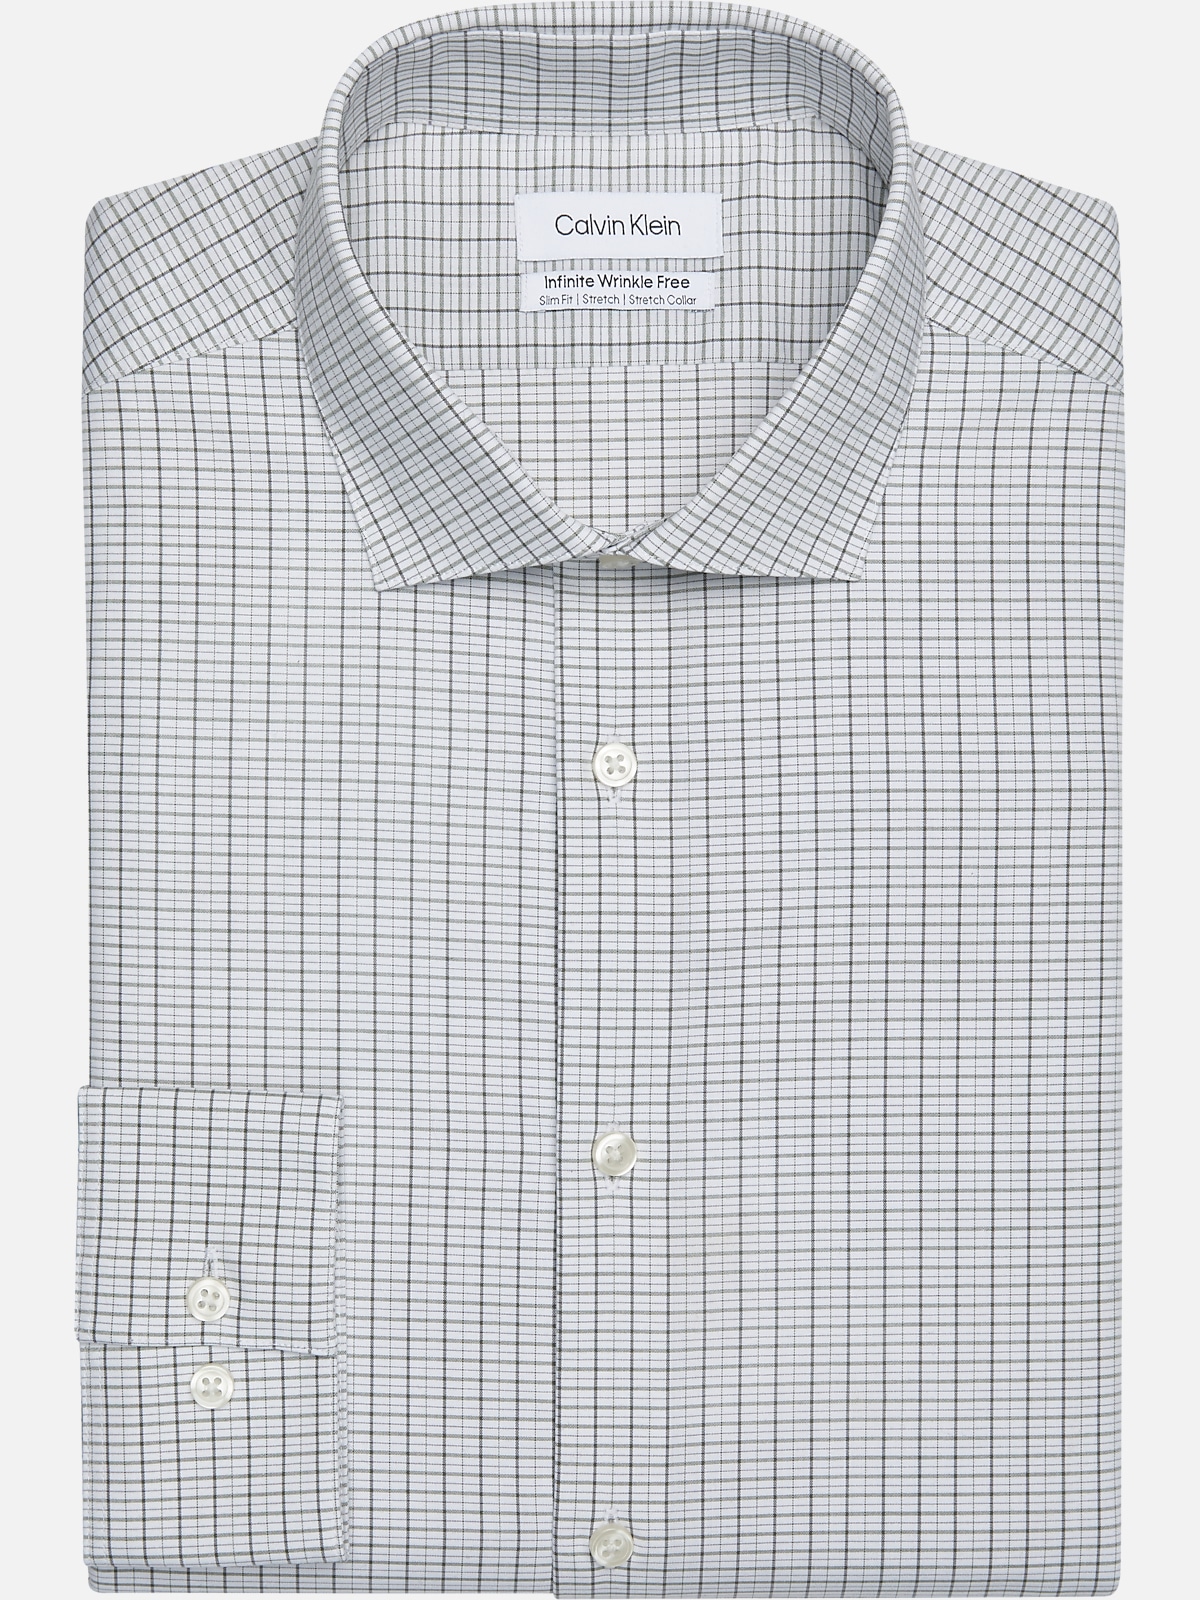 Calvin Klein Infinite Wrinkle Free Slim Fit Stretch Collar Grid Dress Shirt  | Clearance Dress Shirts| Men\'s Wearhouse